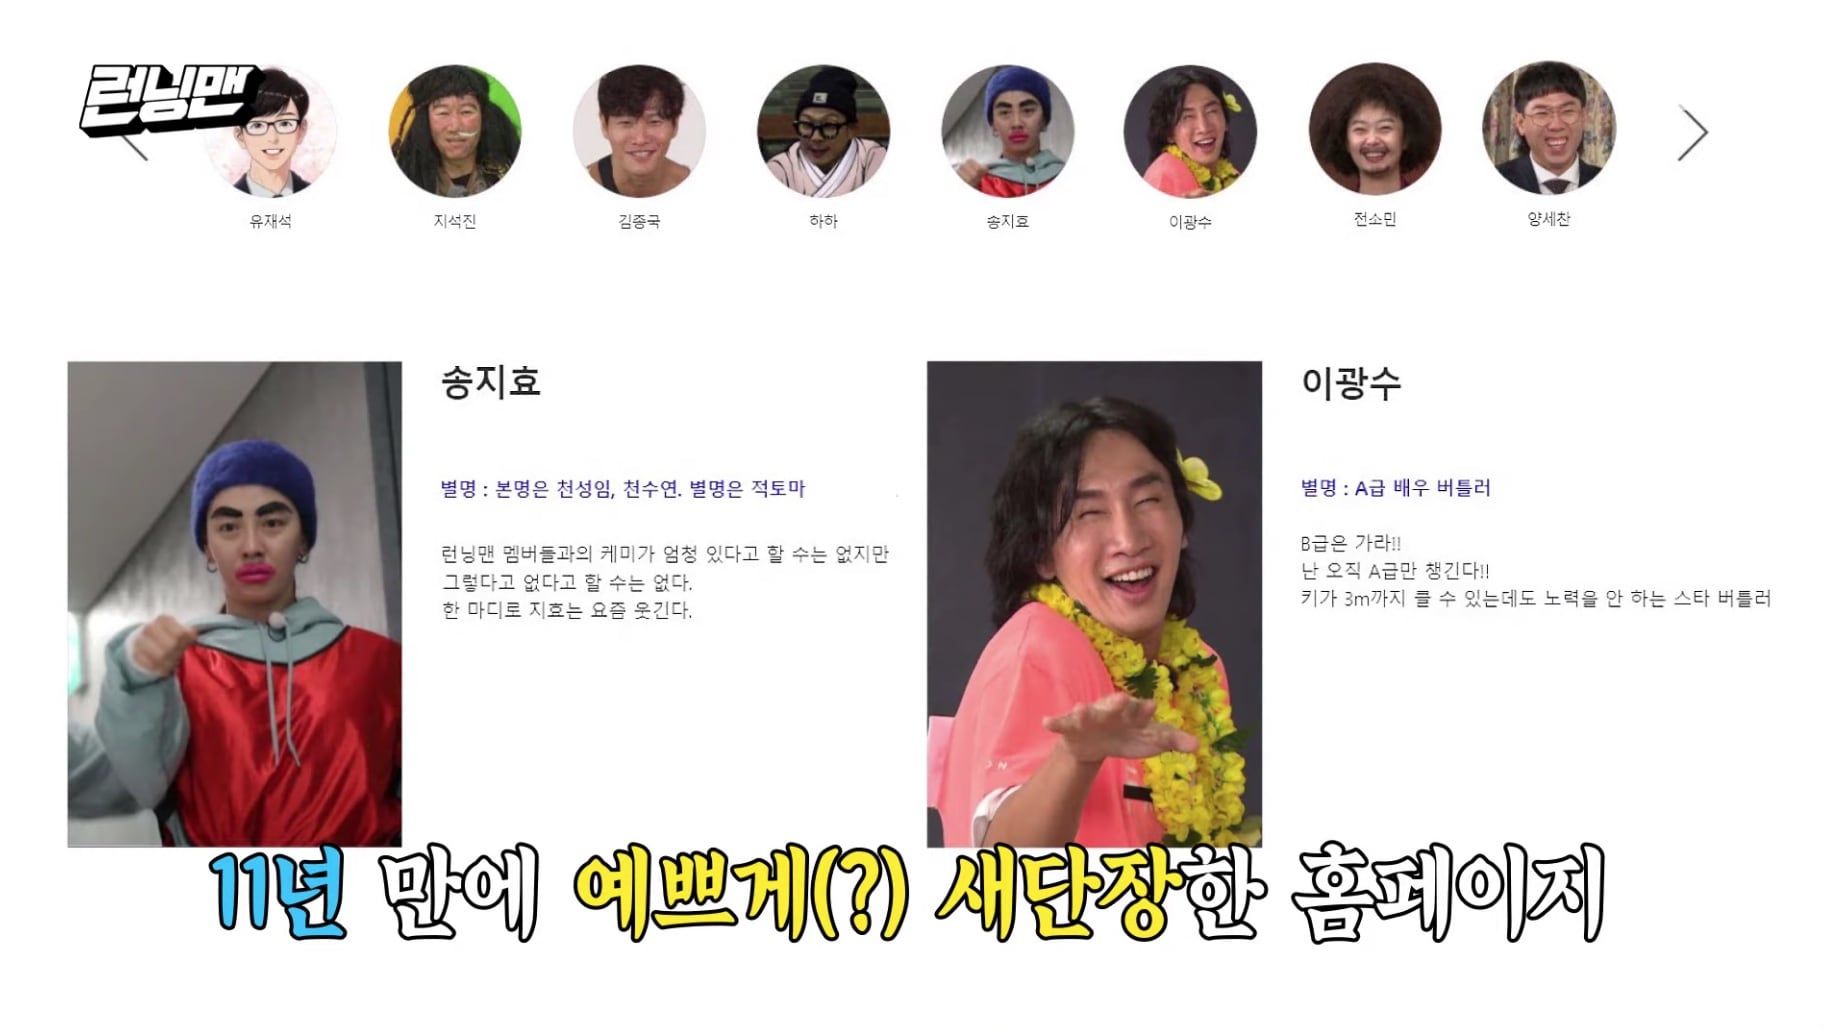 Foto Profil Terbaru Song Ji Hyo dan Lee Kwang Soo di Web Running Man 